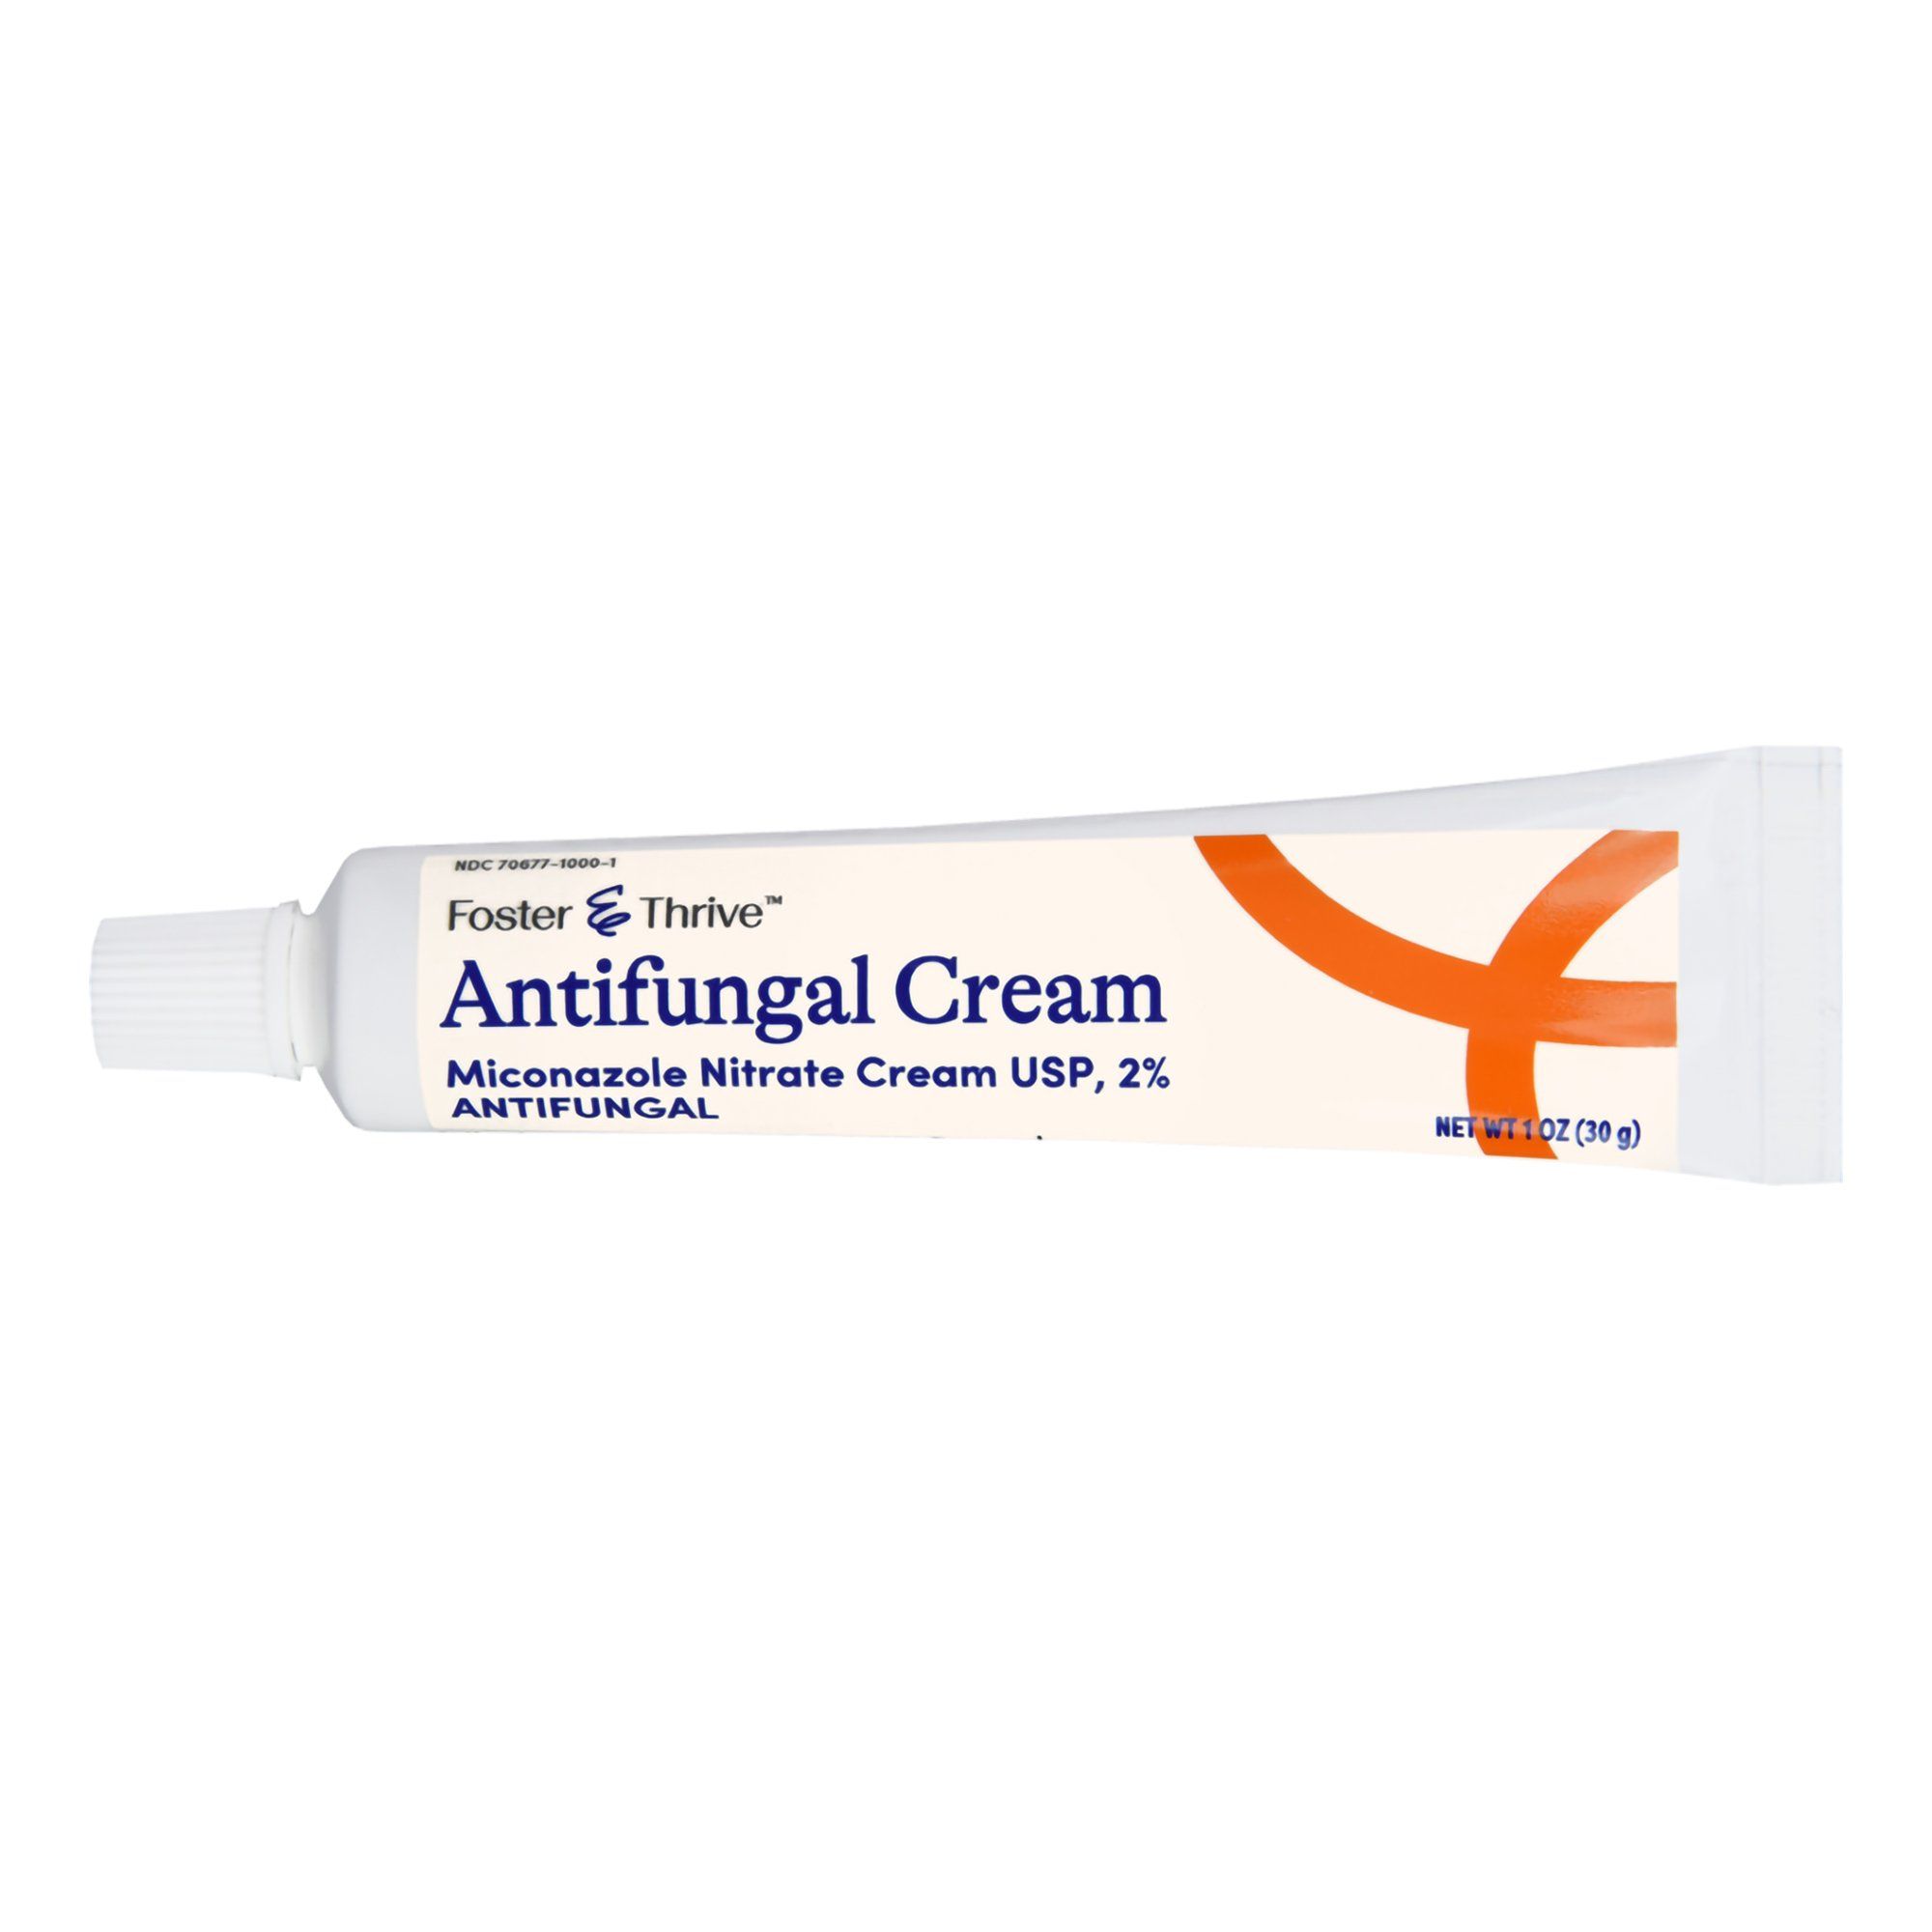 Foster & Thrive Antifungal Miconazole Nitrate Cream USP, 2% -  1 oz